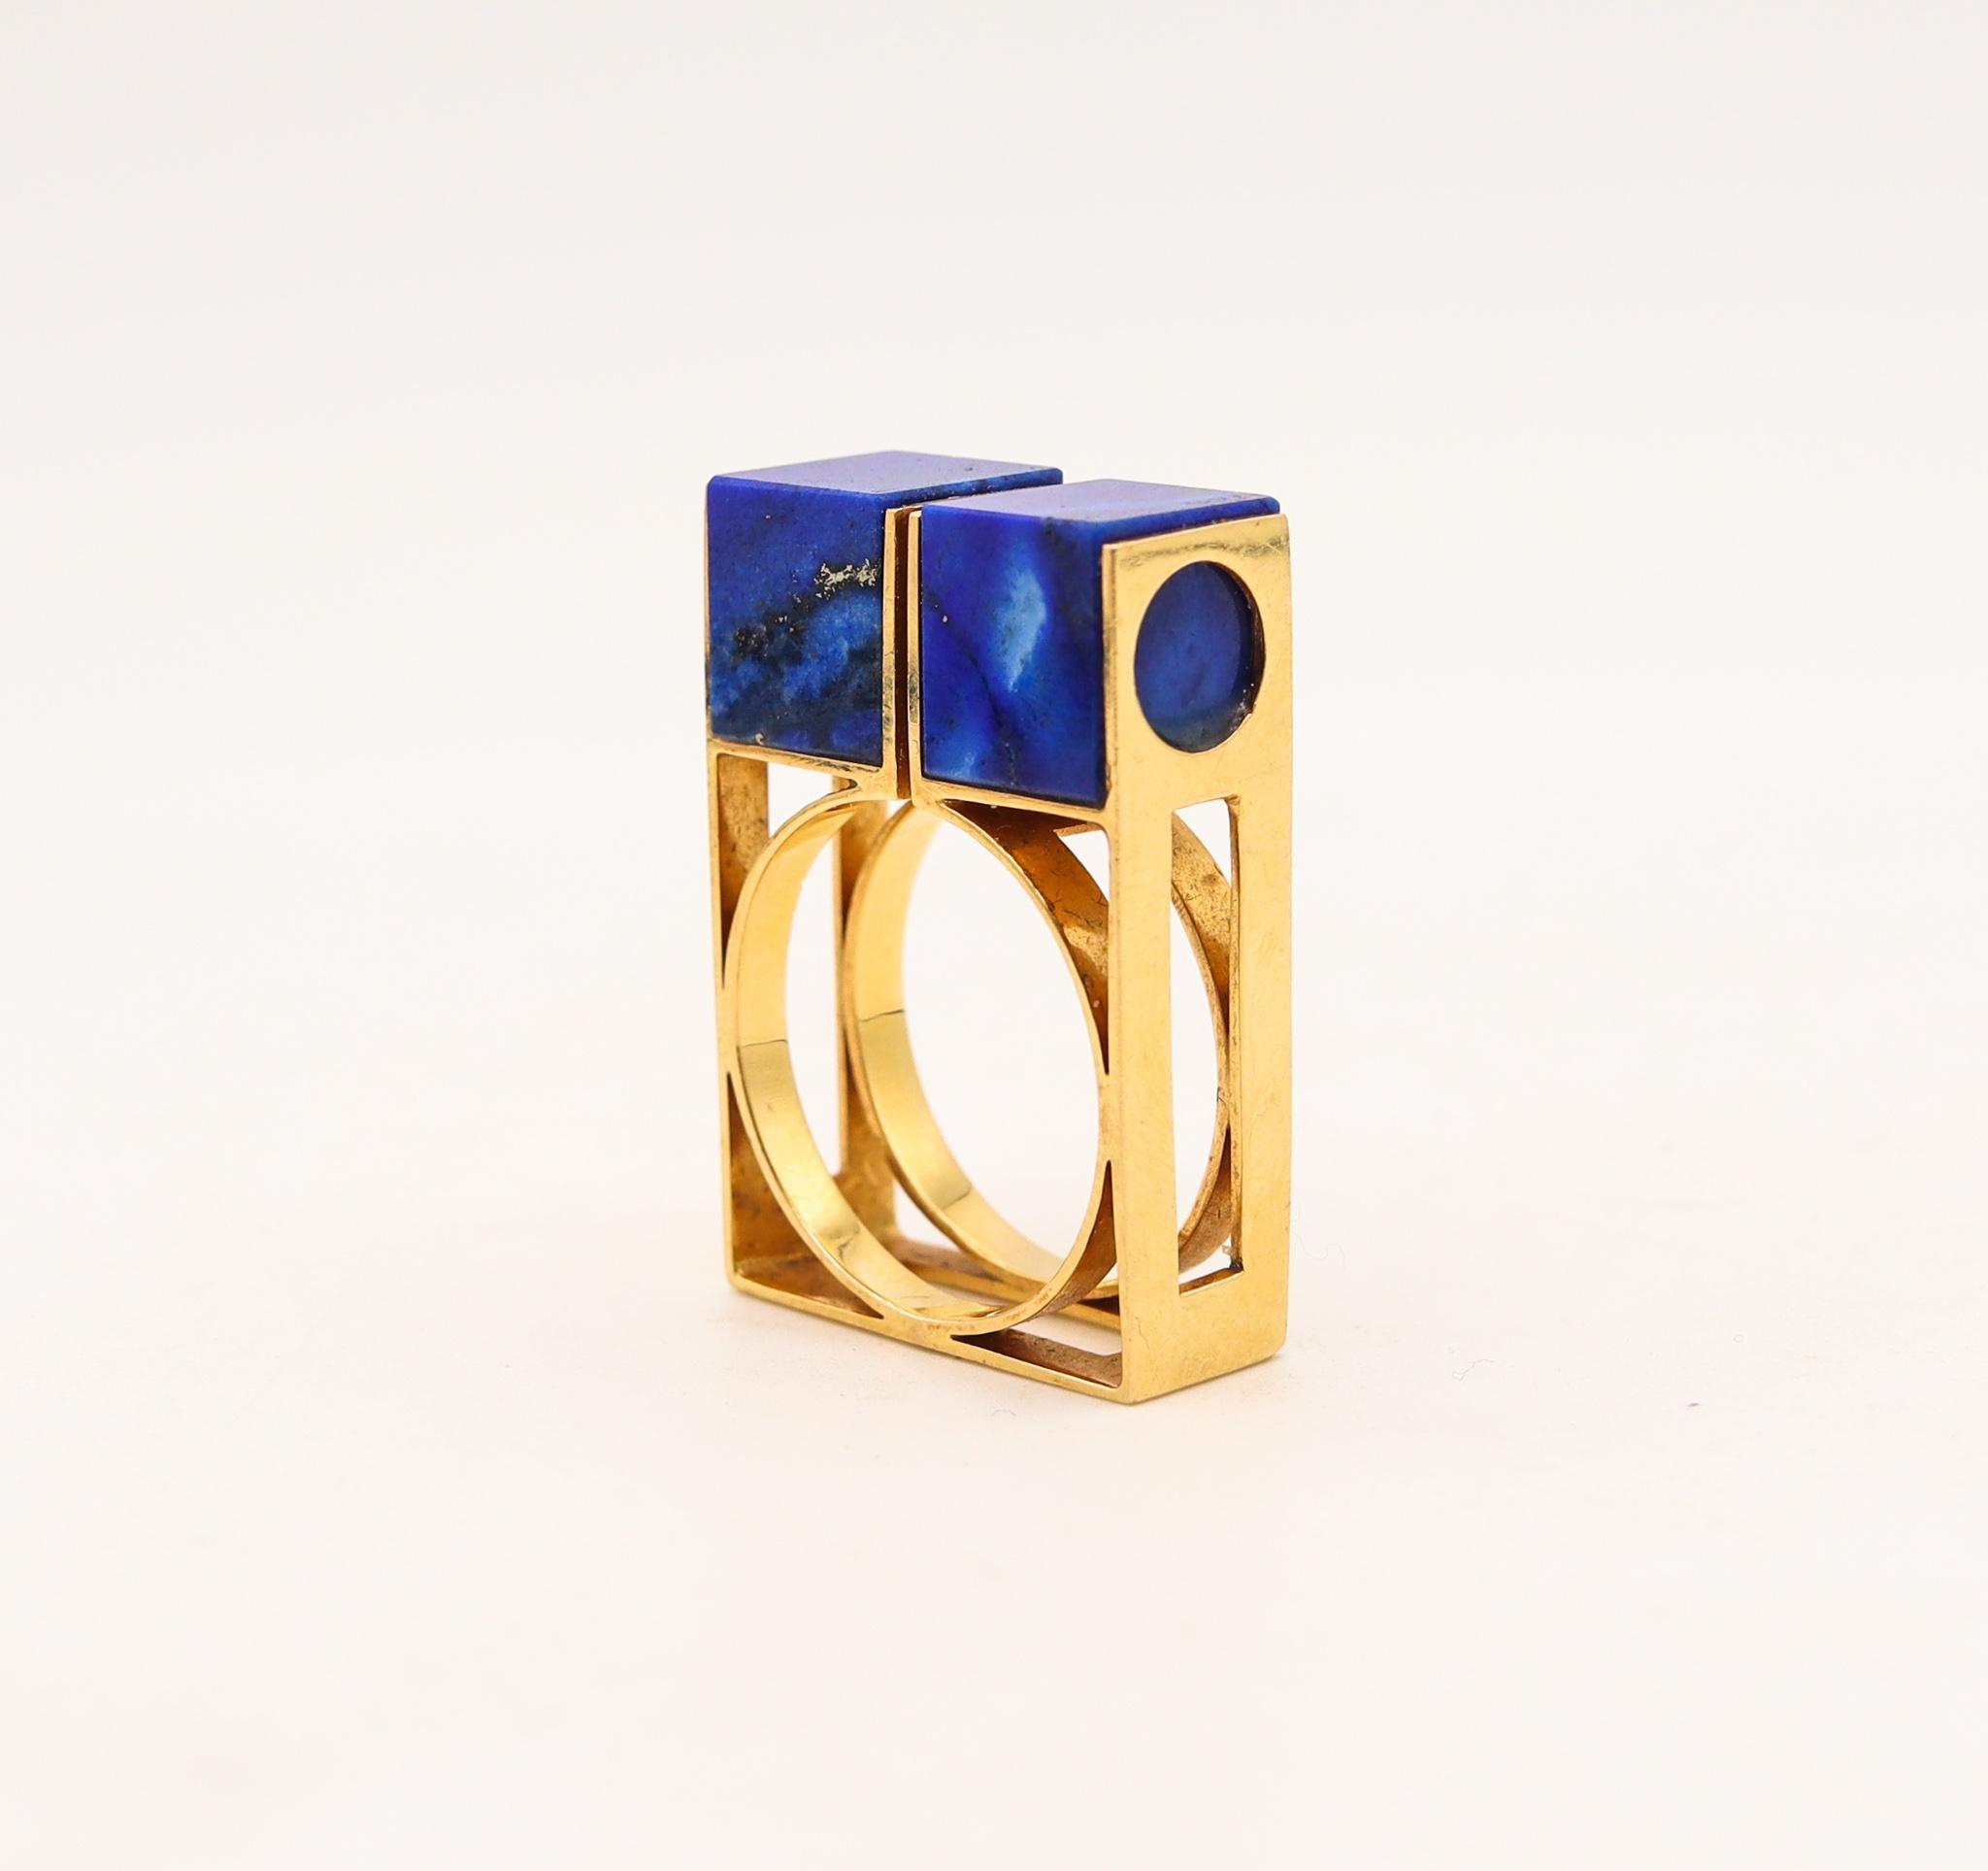 Cabochon Octavio Sarda Palau 1970 Barcelona Geometric Ring in 18Kt Gold and Lapis Lazuli